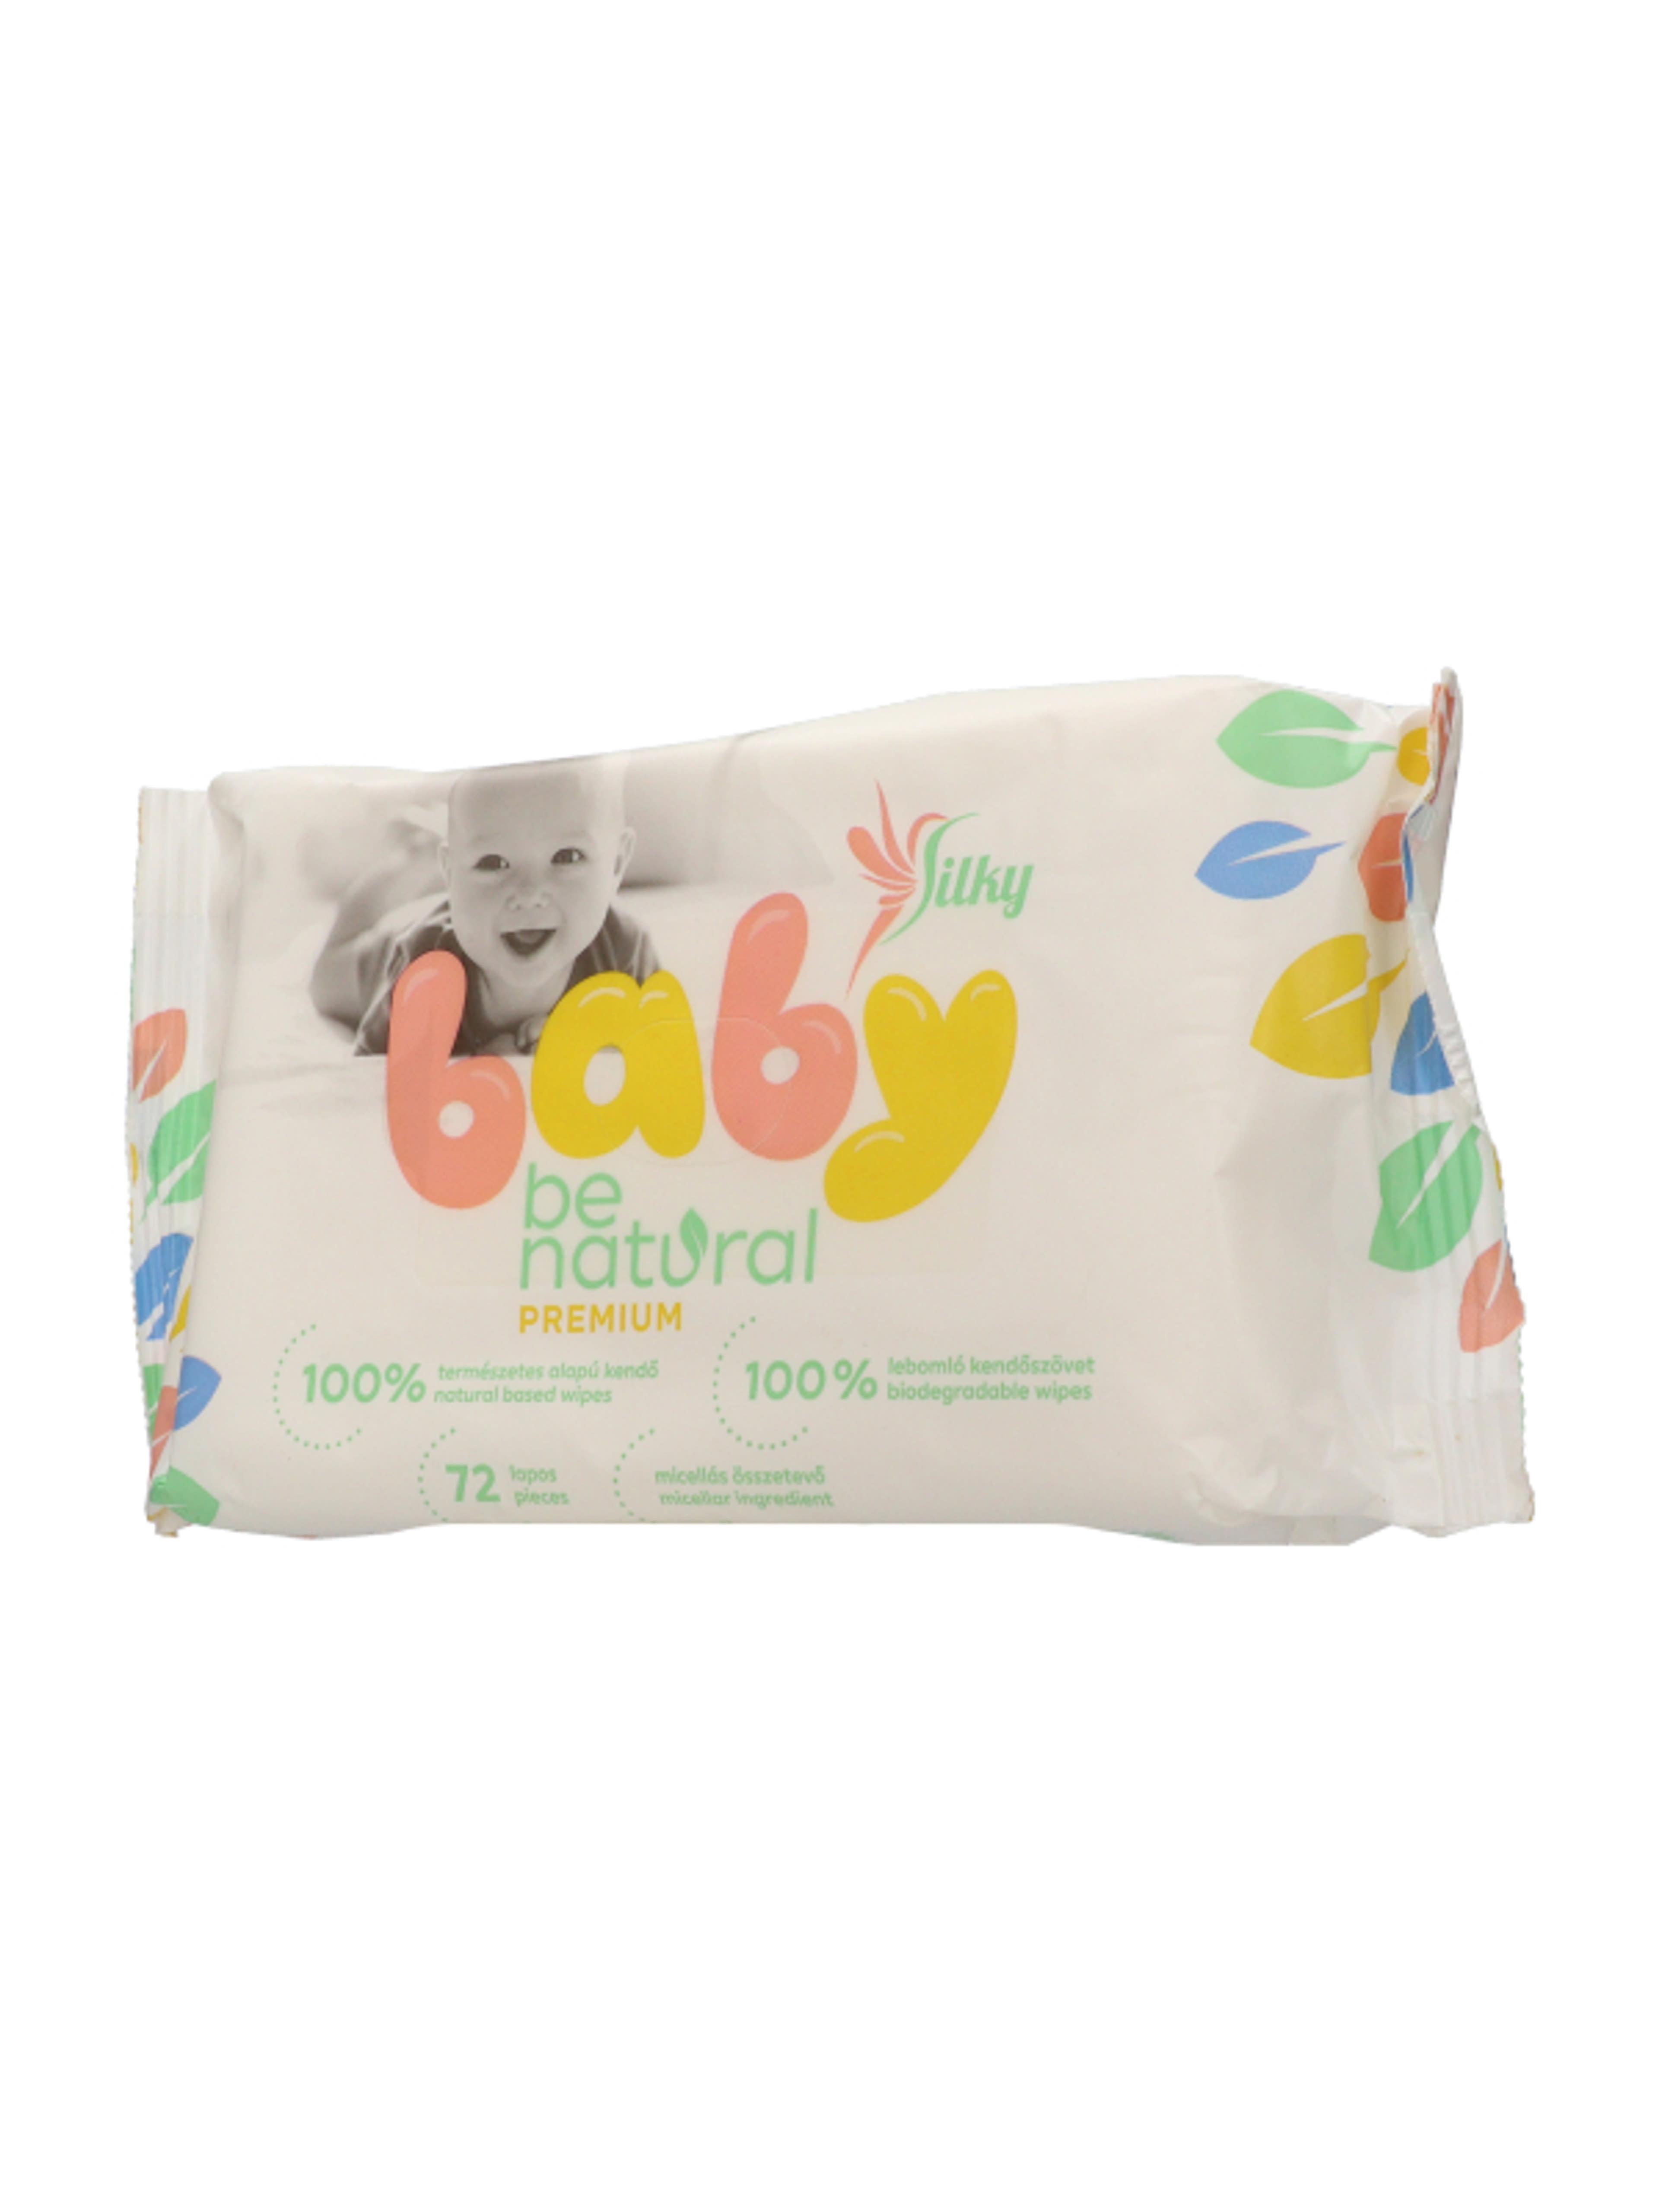 Silky baby be natural prémium törlőkendő - 72 db-3